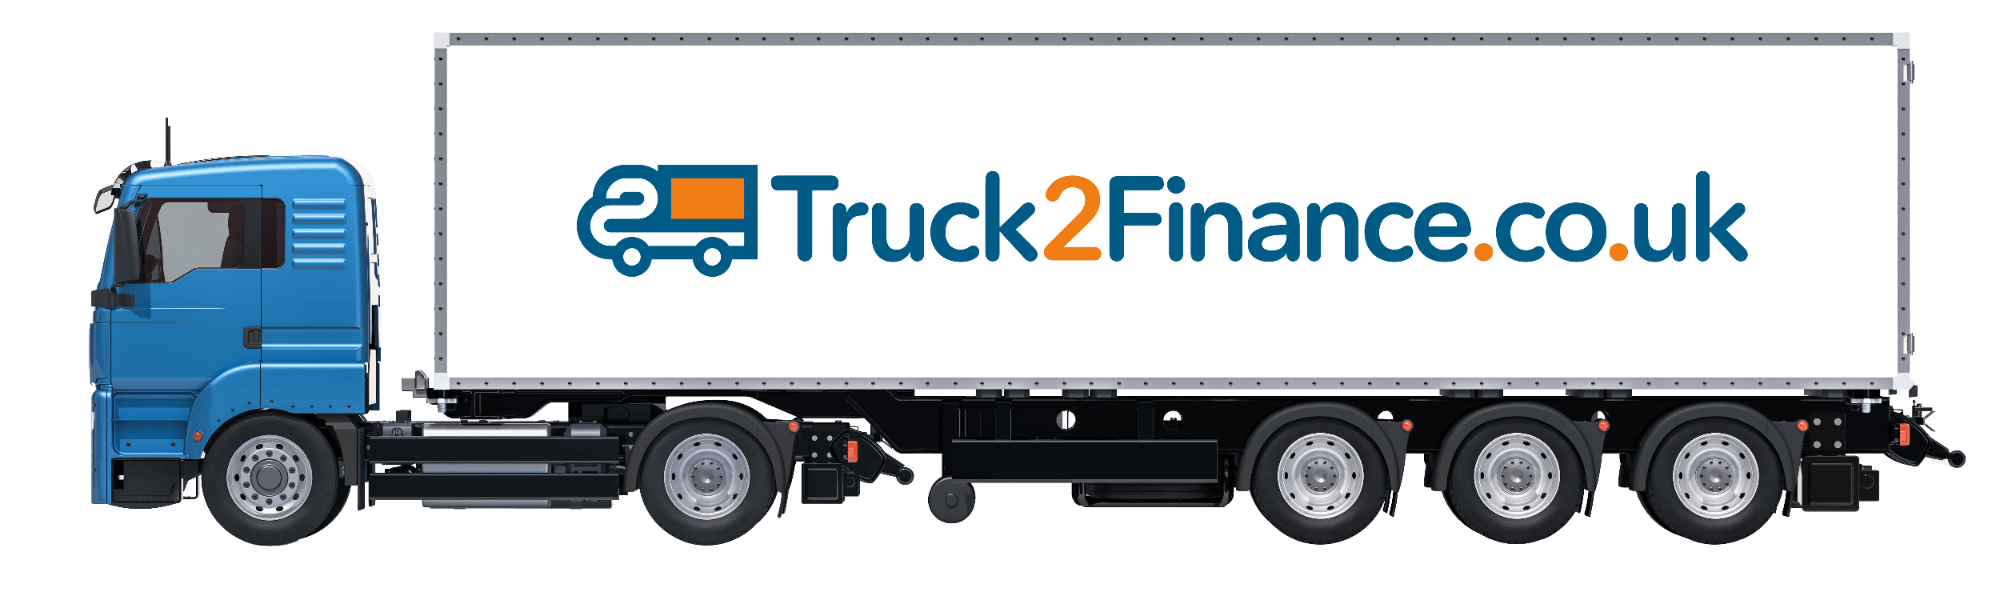 Truck2Finance Truck finance